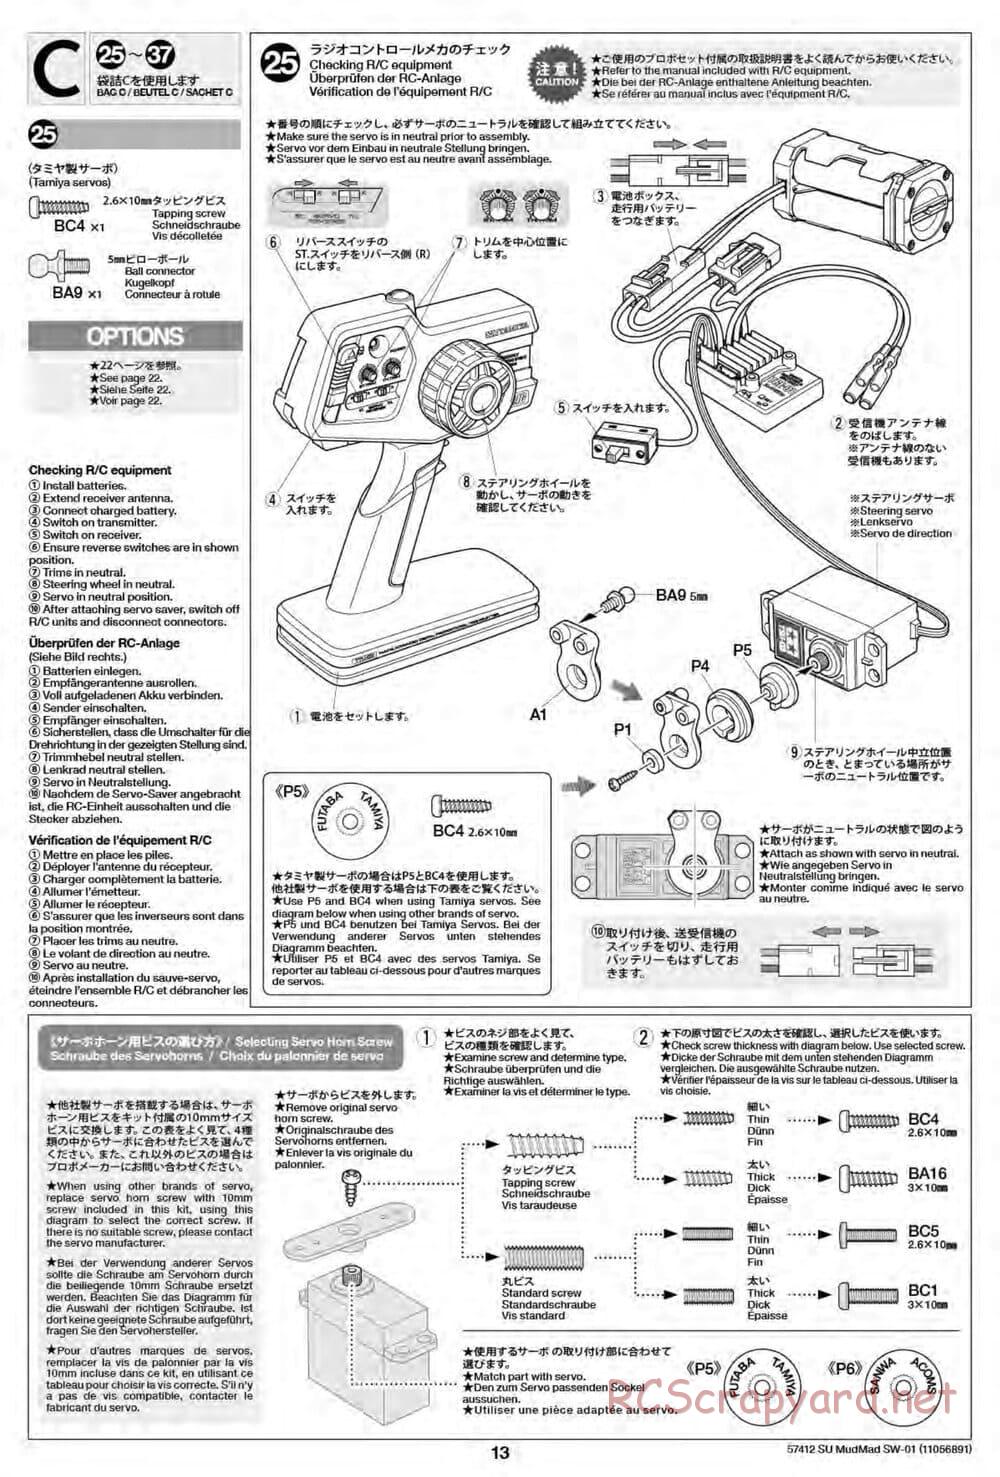 Tamiya - MudMad - SW-01 Chassis - Manual - Page 13